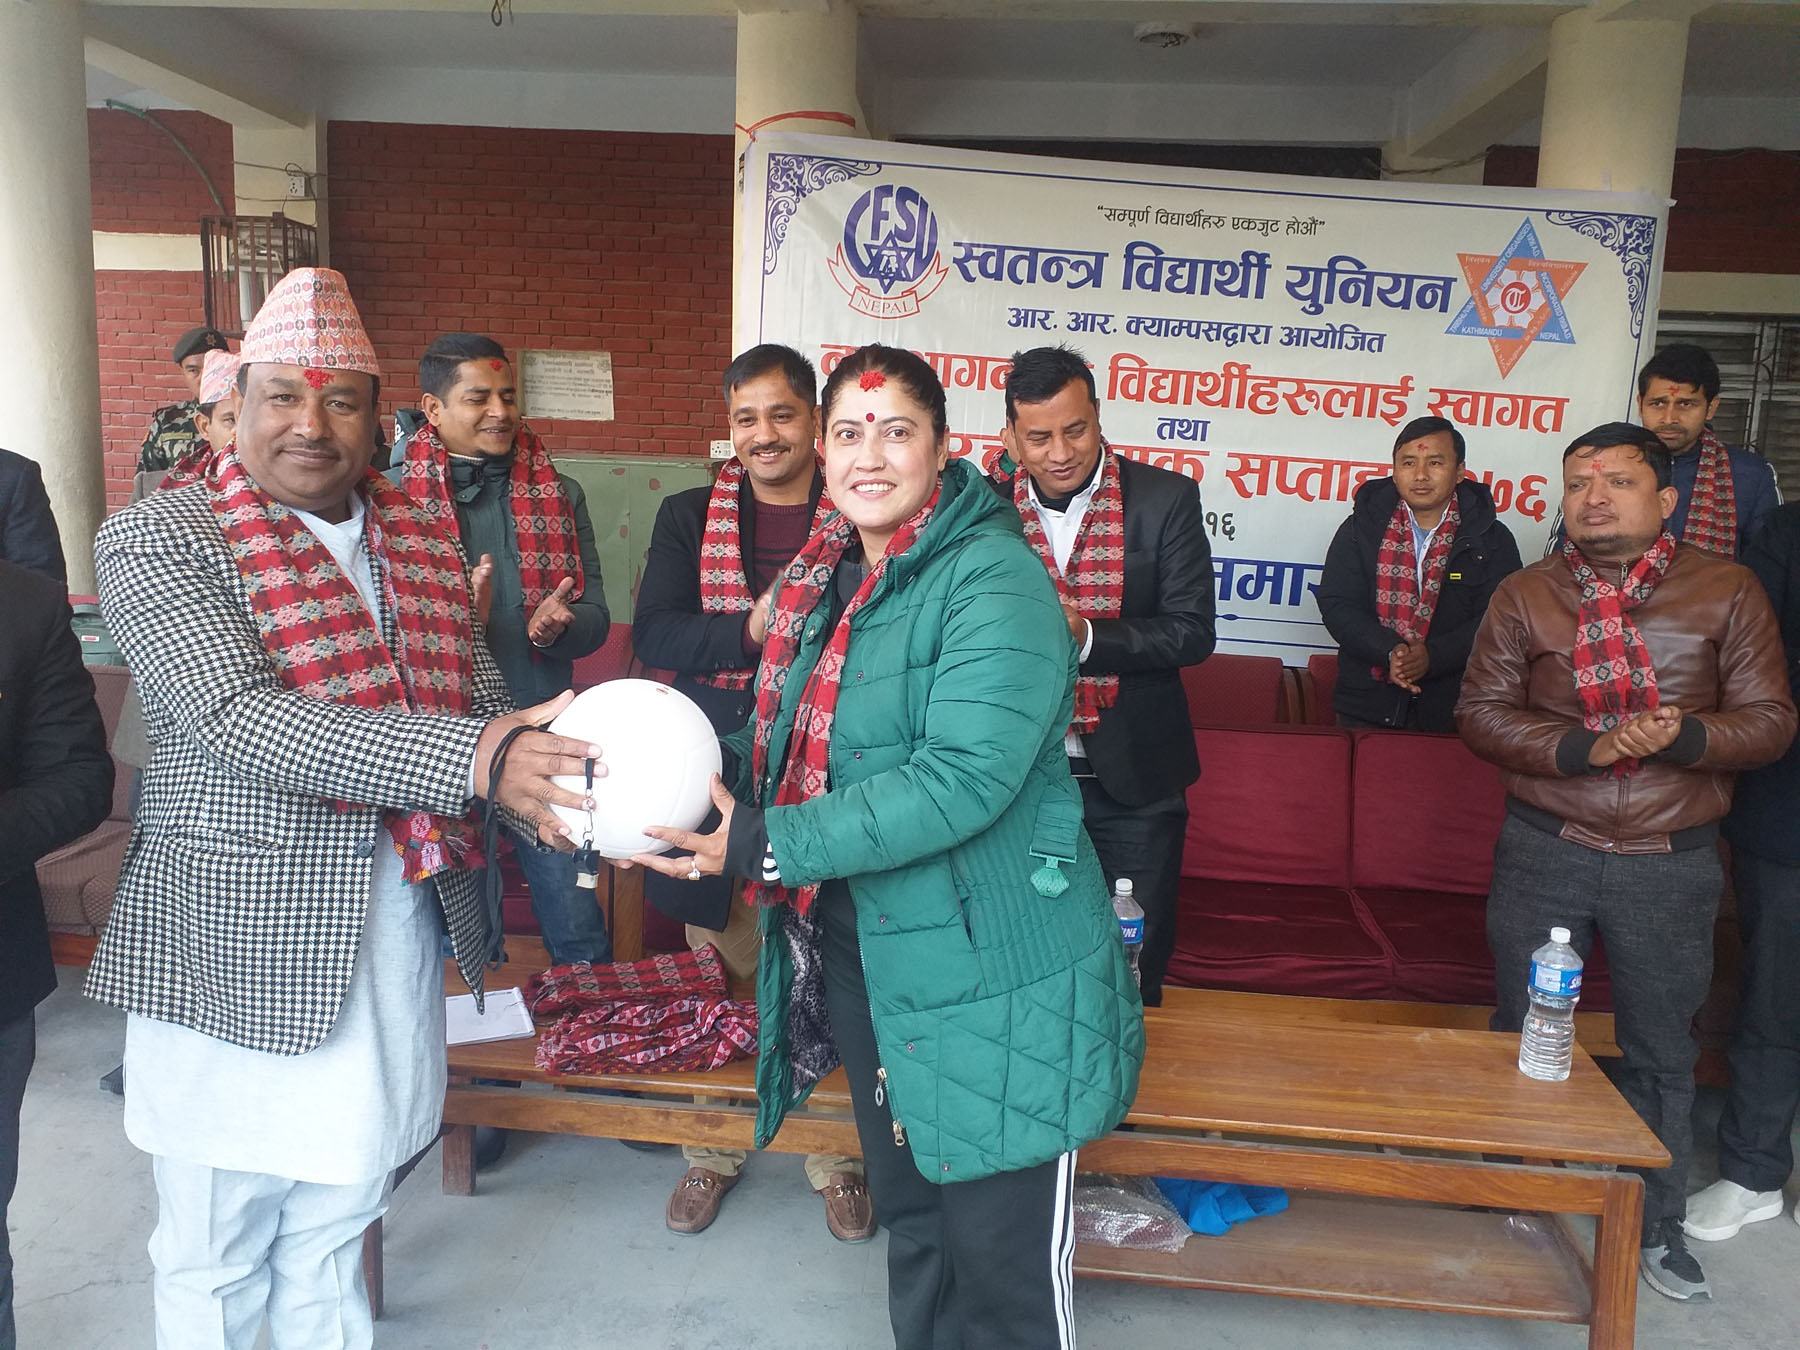 Minister Bishwakarma claims Nepal achieved progress in sports